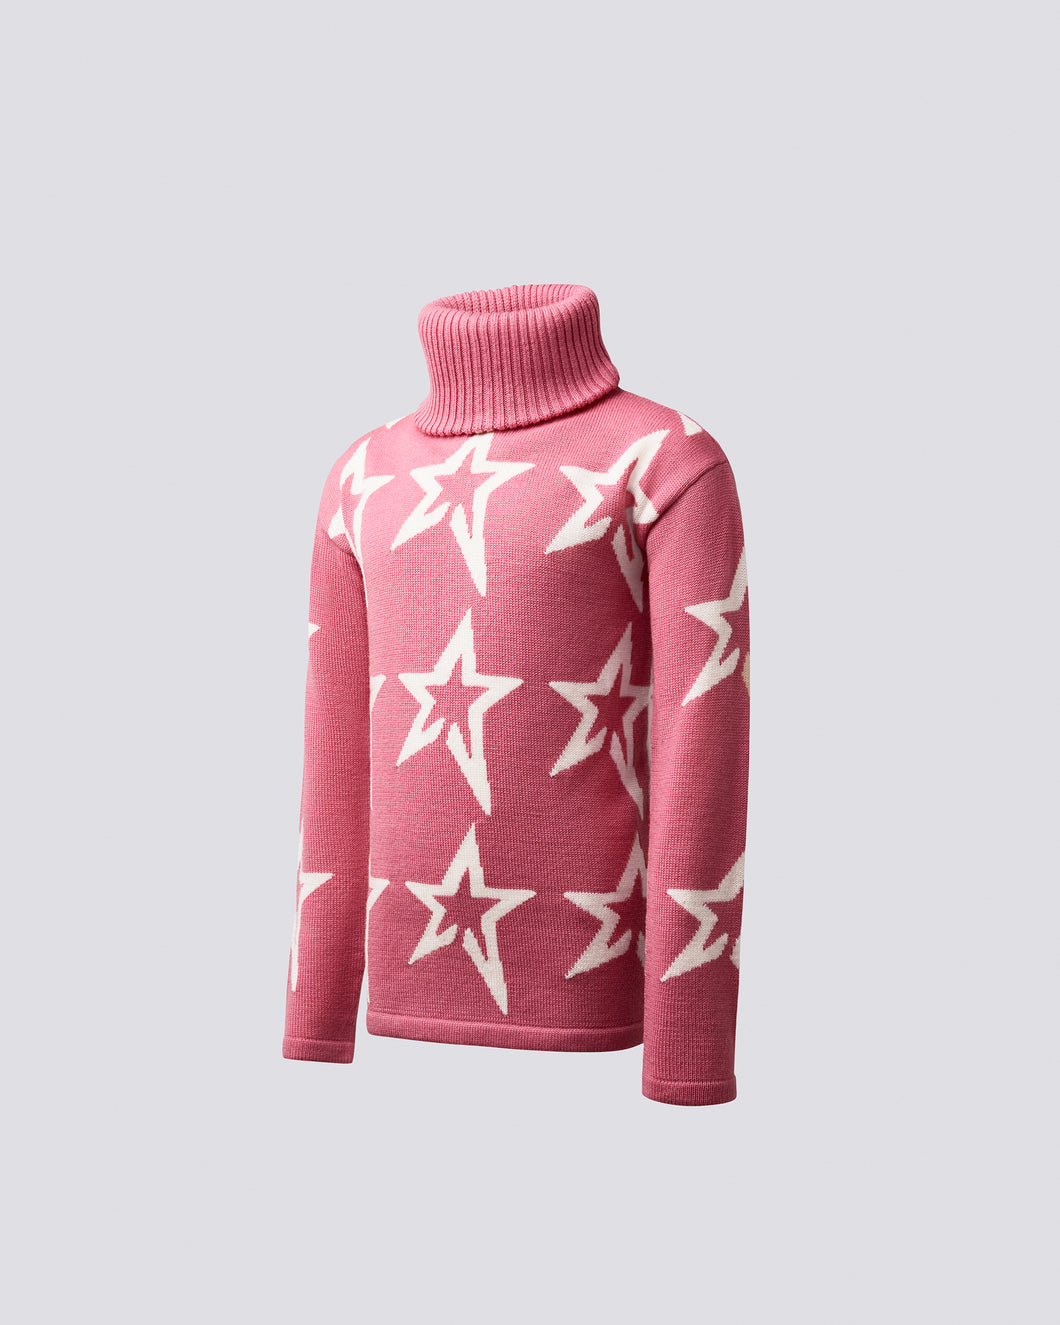 Star Dust Sweater Jr - Peach Pink/Snow White Star